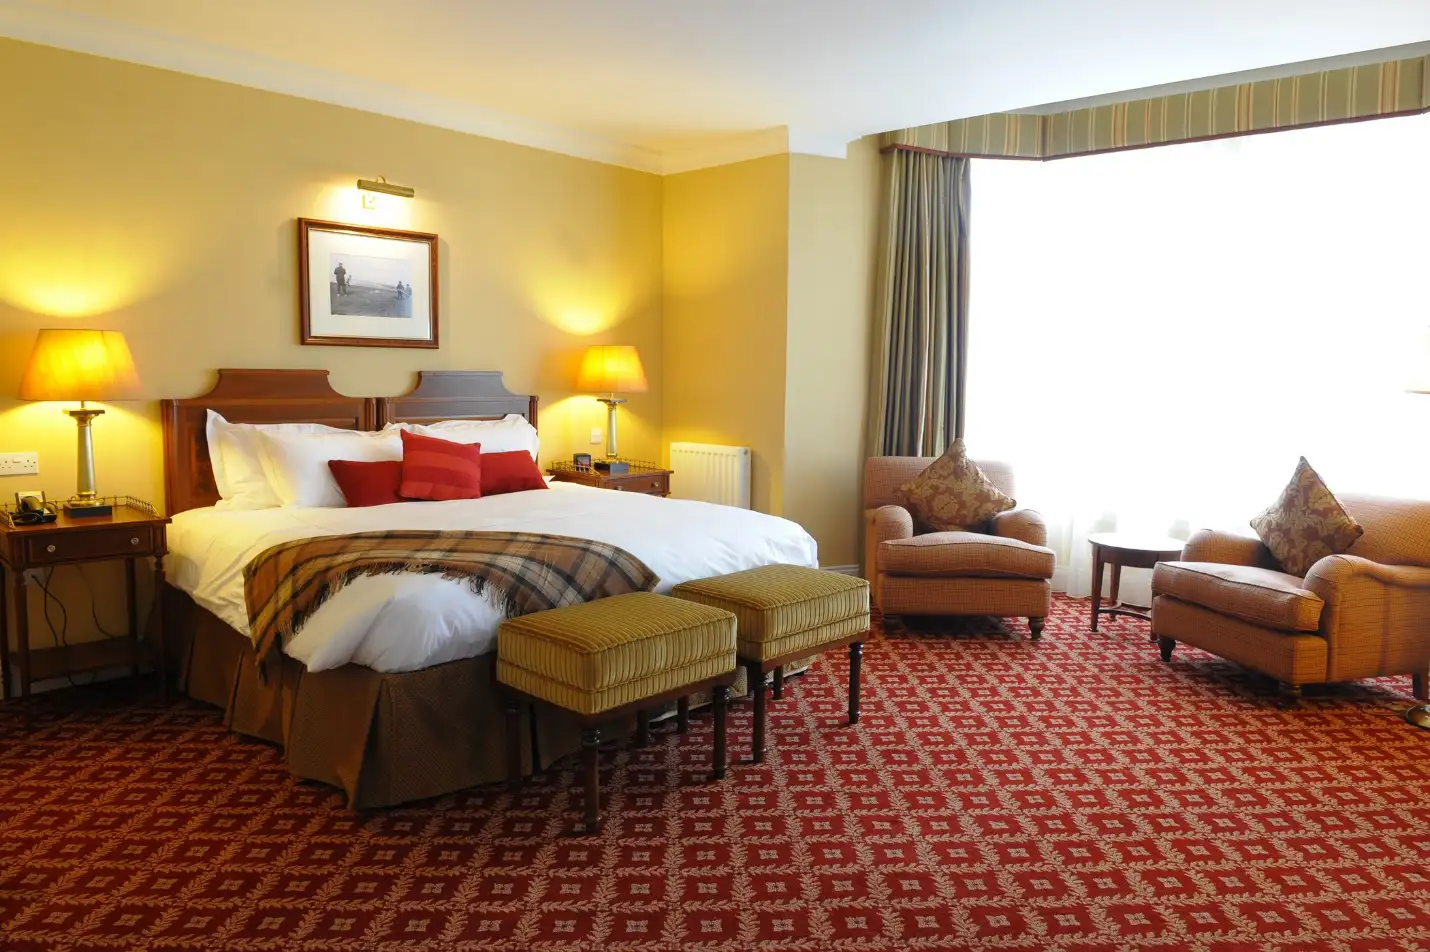 Communal Spaces in hotel rooms